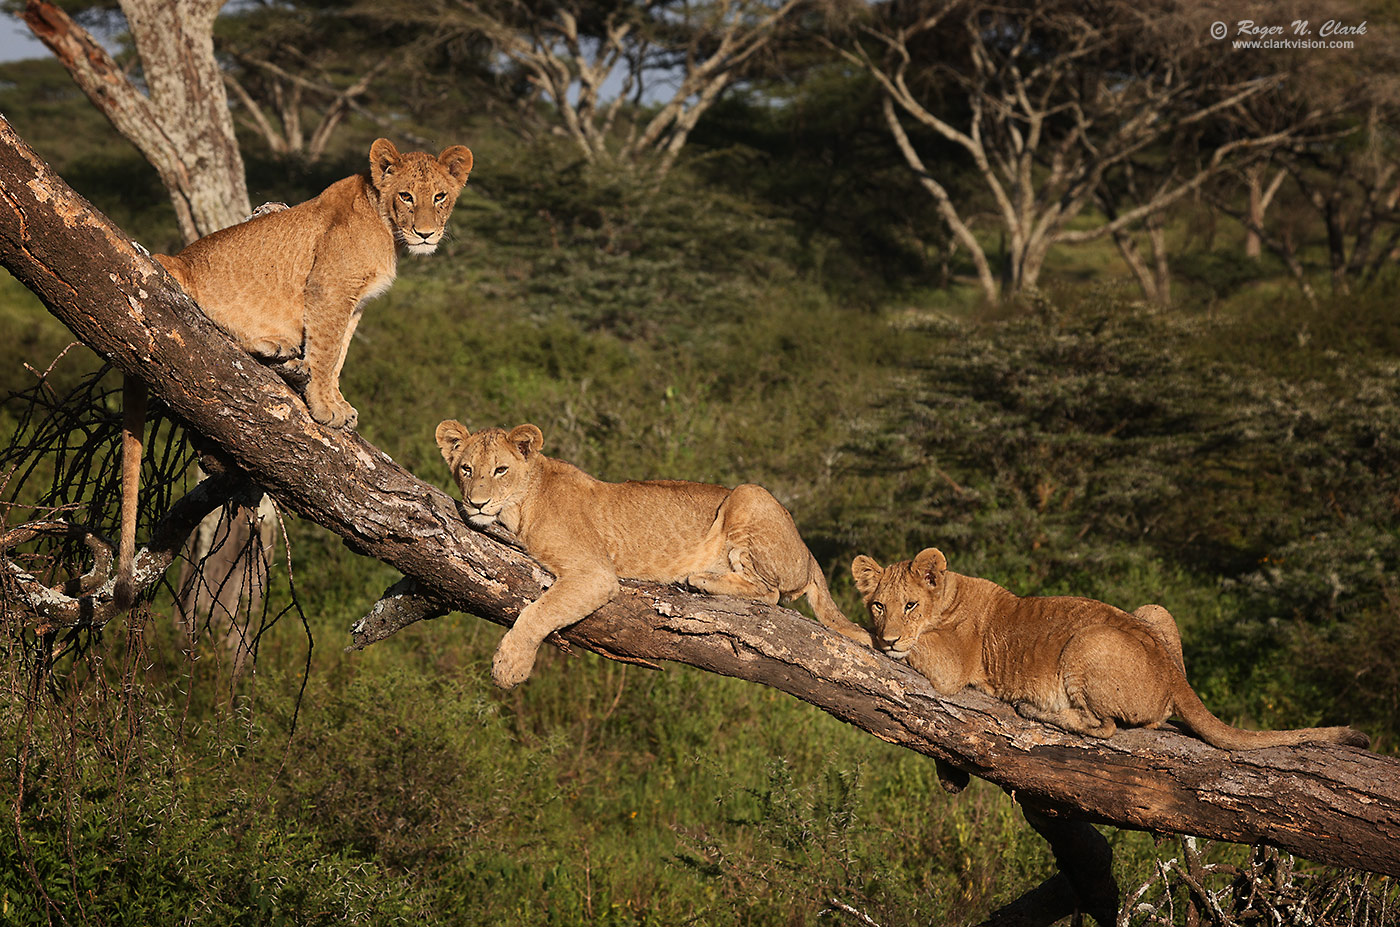 image three-lions-in-a-tree-c02-17-2024-4C3A0791-b-1400s.jpg is Copyrighted by Roger N. Clark, www.clarkvision.com